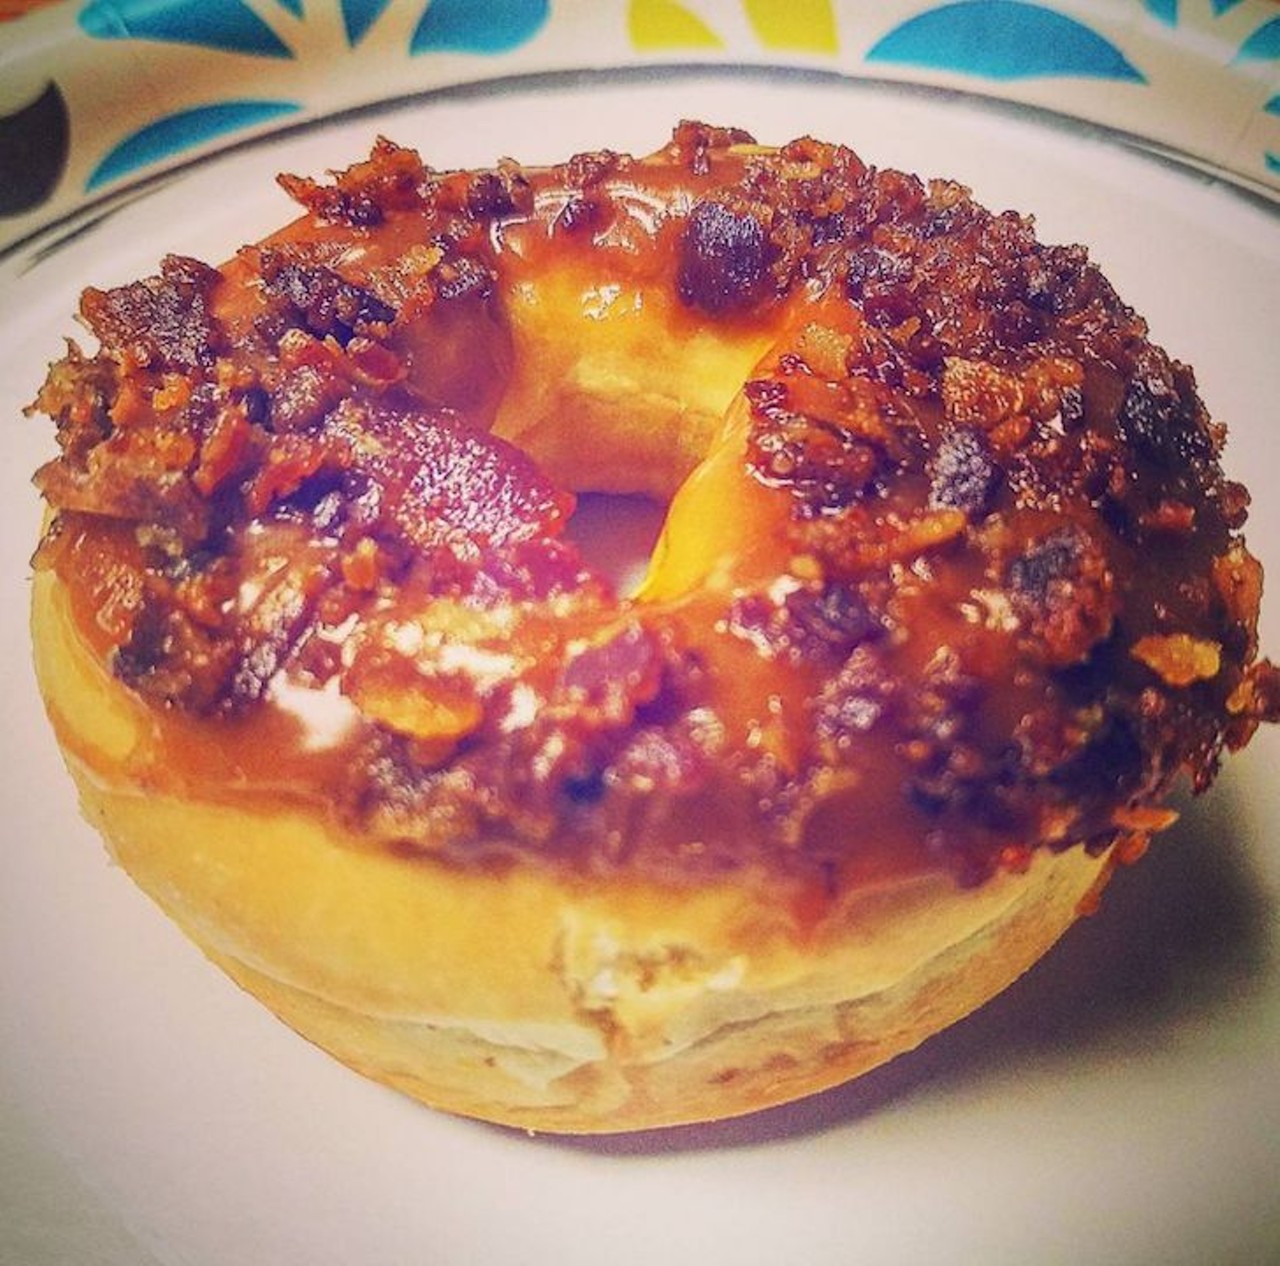 Must try: Maple Bacon Donut 
Photo via adrianpg1987/Instagram